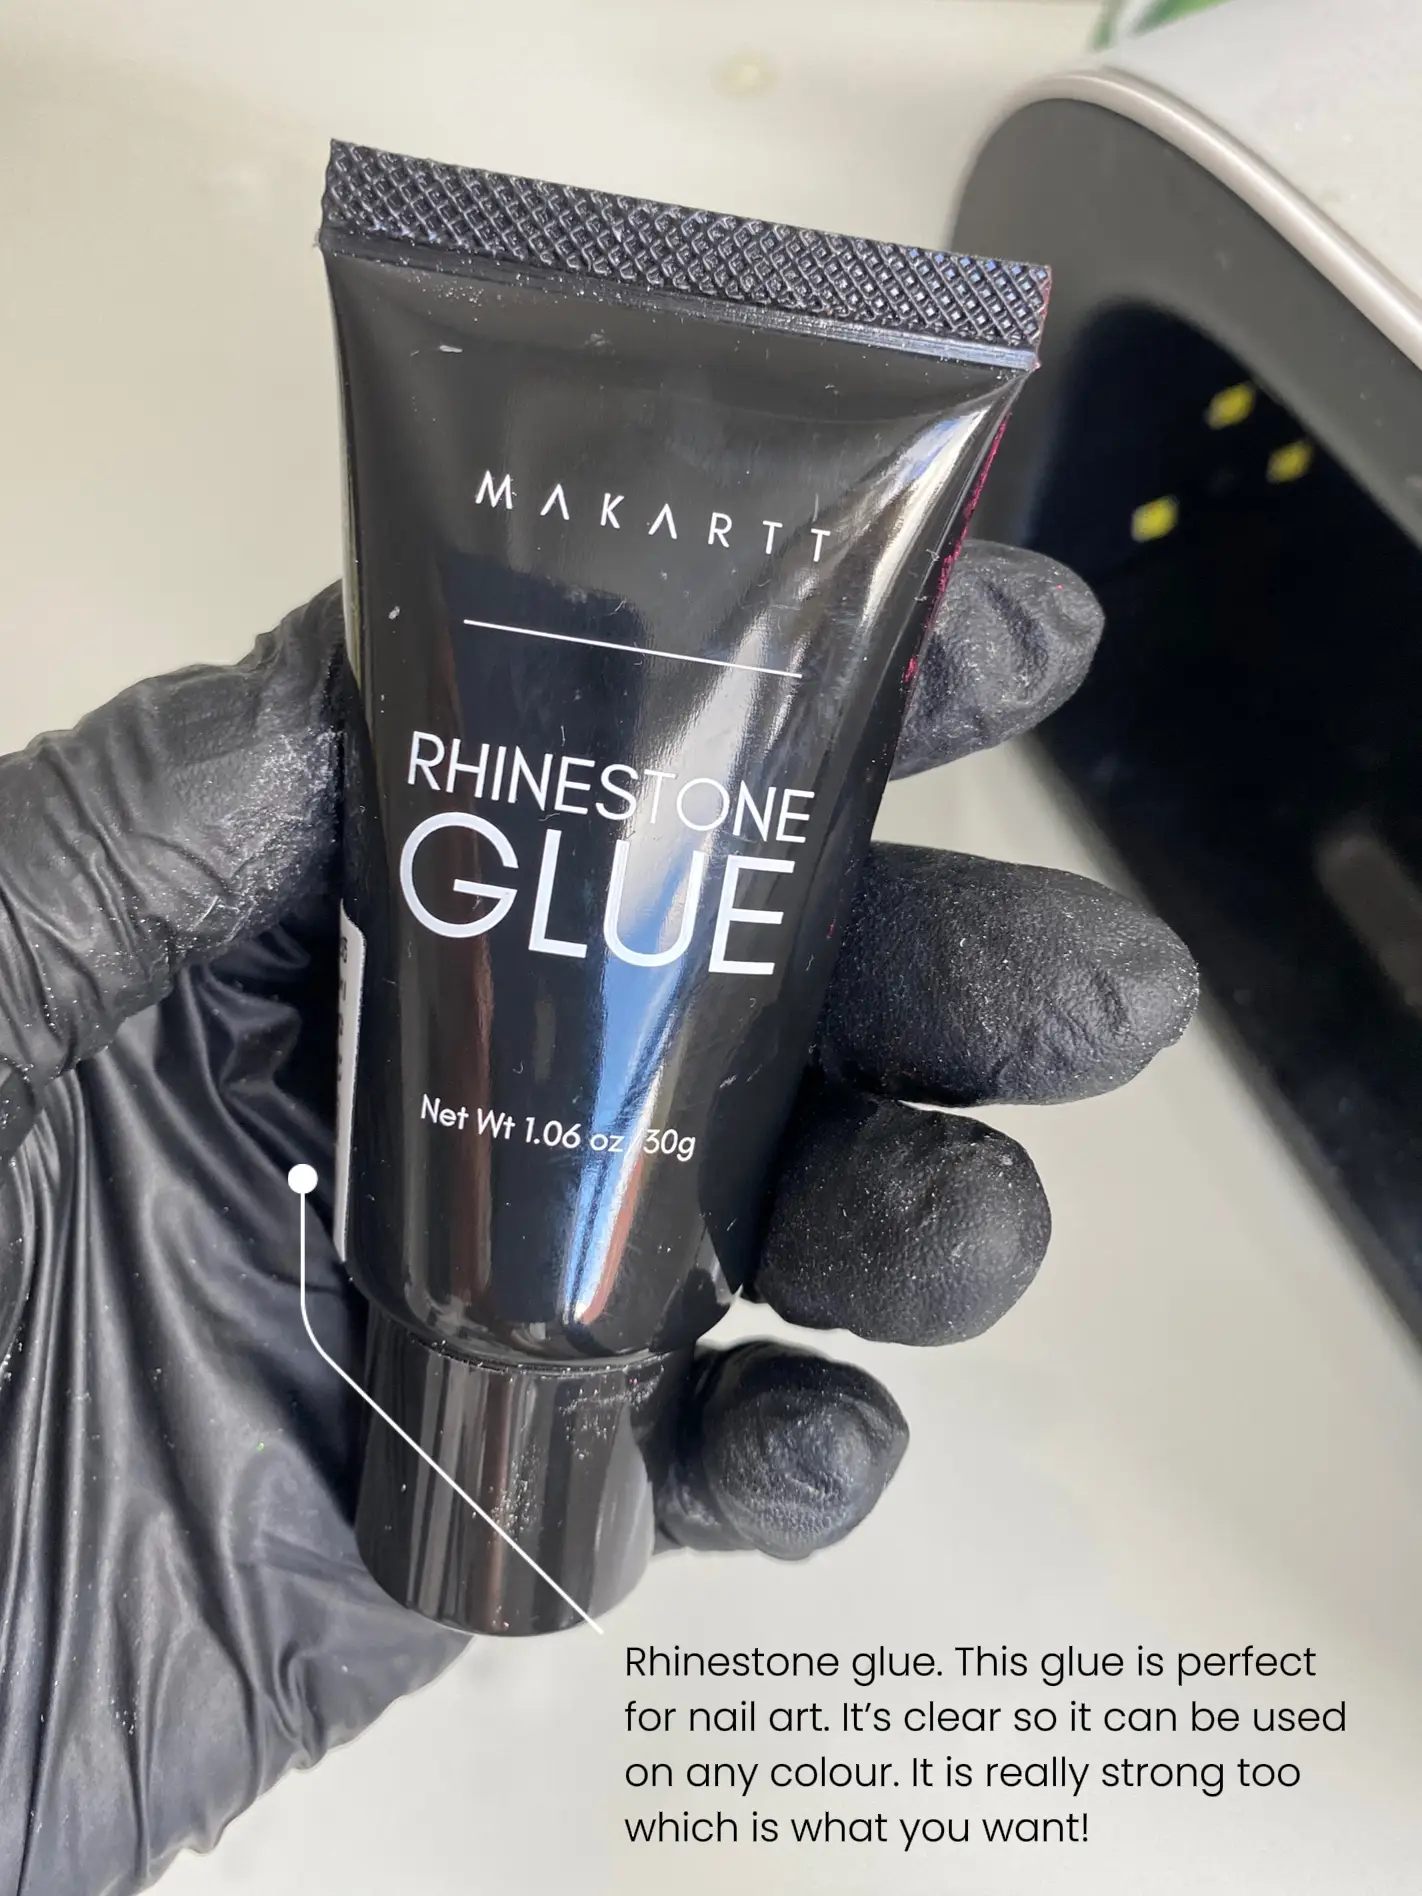 How to do Gel X nails with Makartt rhinestone glue gel